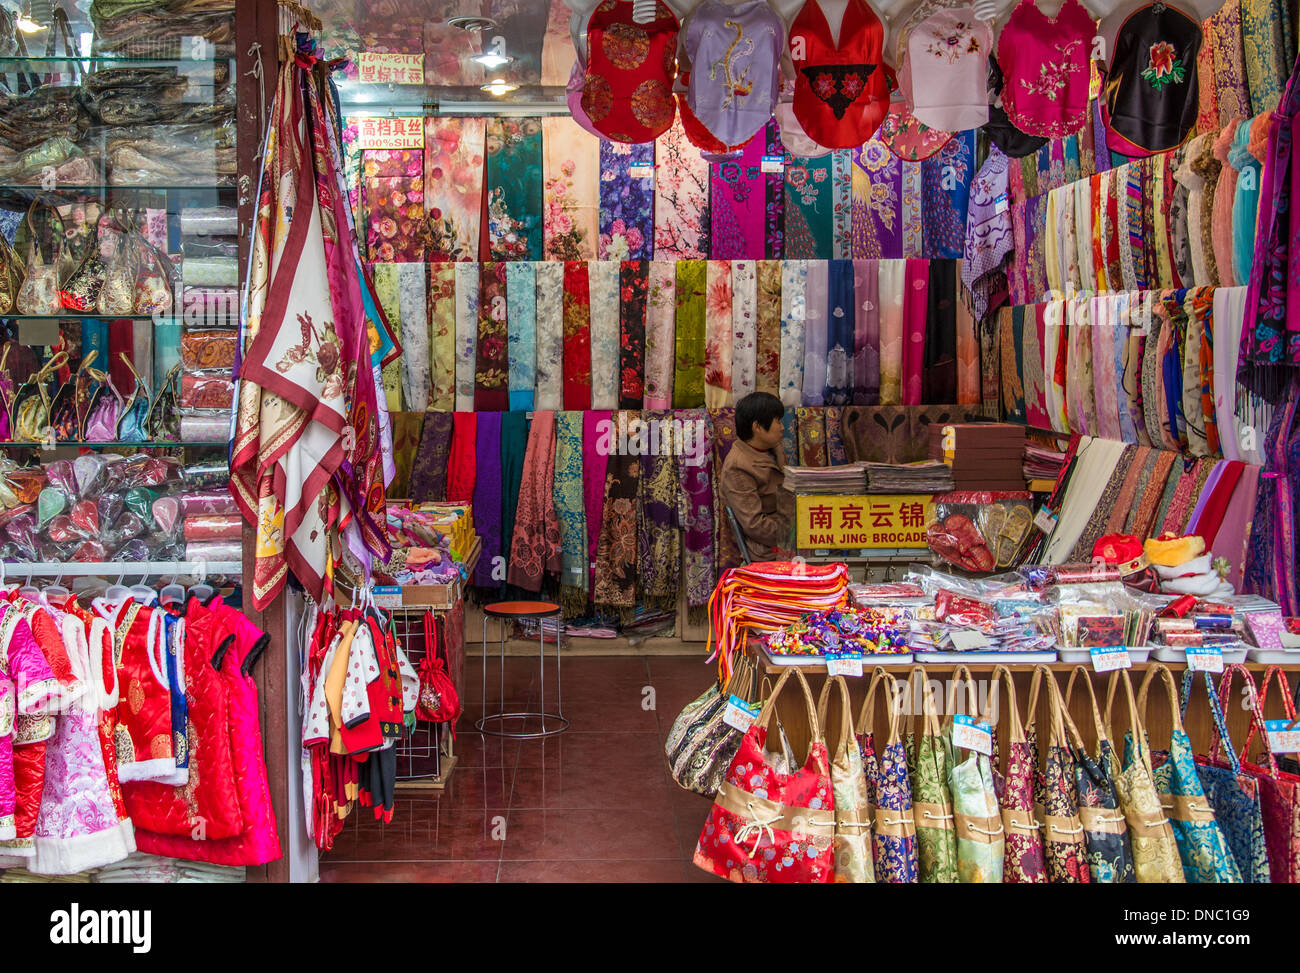 Negozio di vendita colorati prodotti di seta. Nanjing, Jiansu Provincia, Cina. Foto Stock